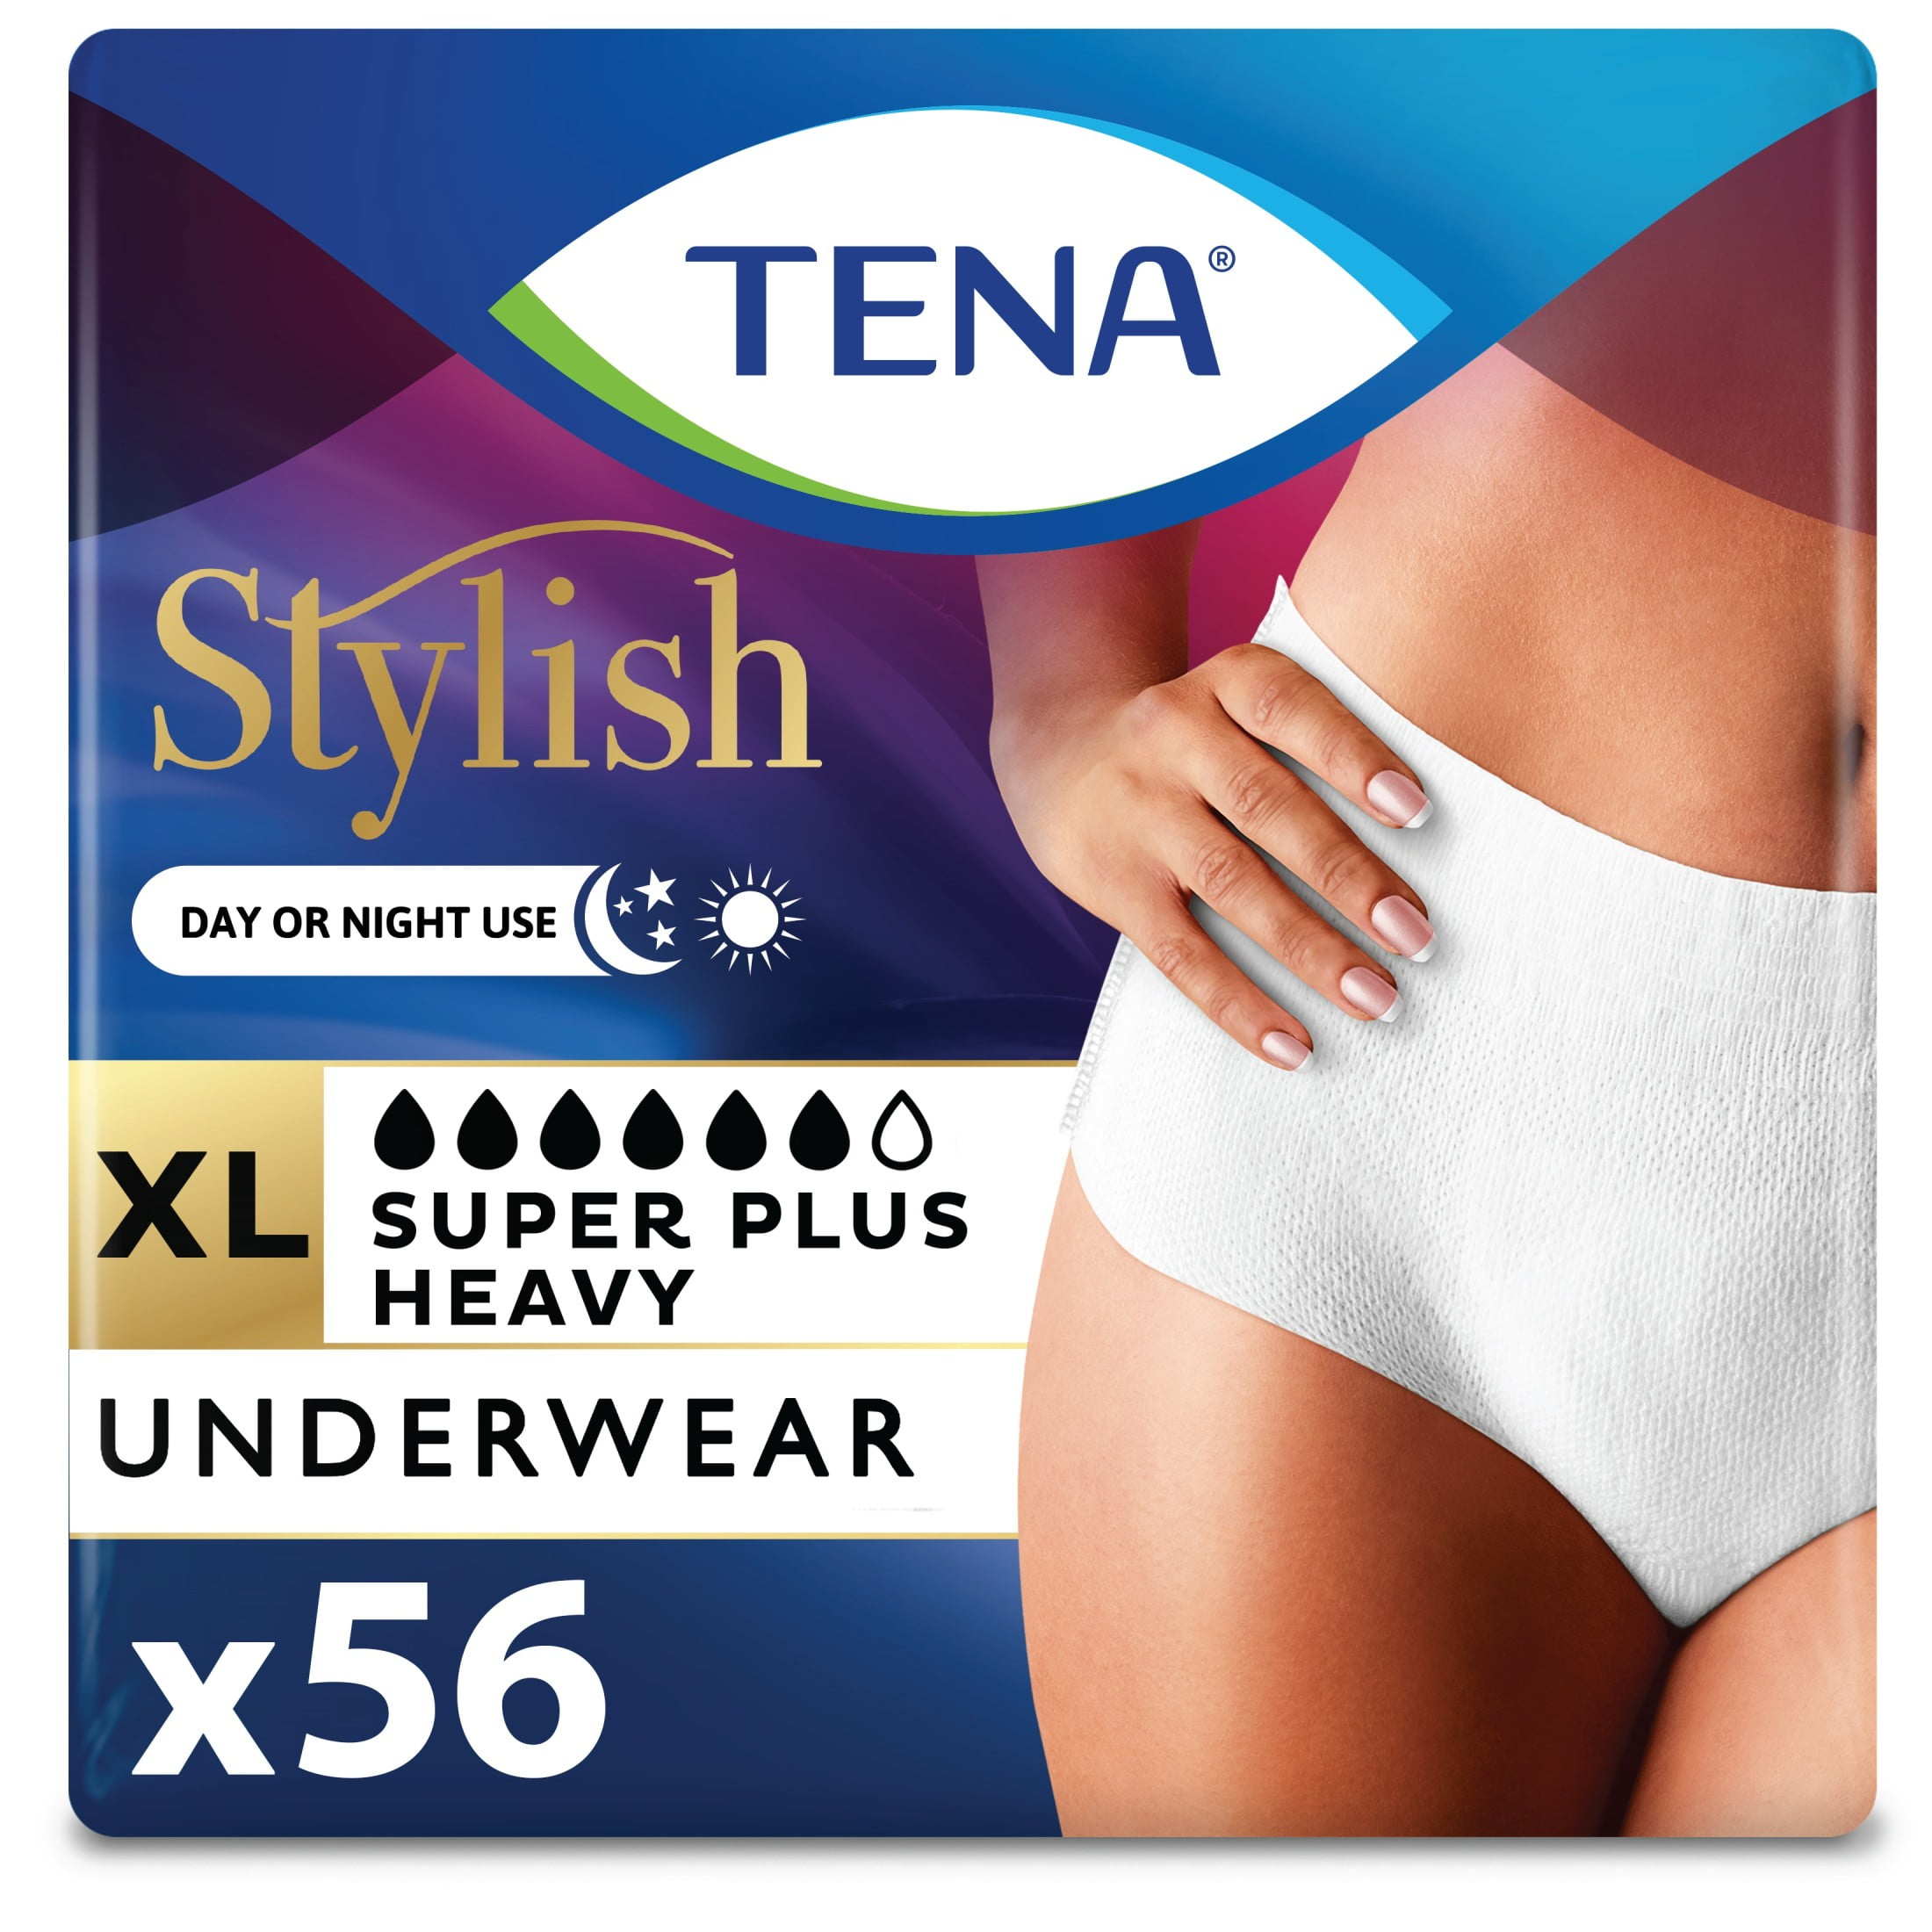 TENA Underwear Unisex Ultimate-Extra Absorbency M, 14 Count